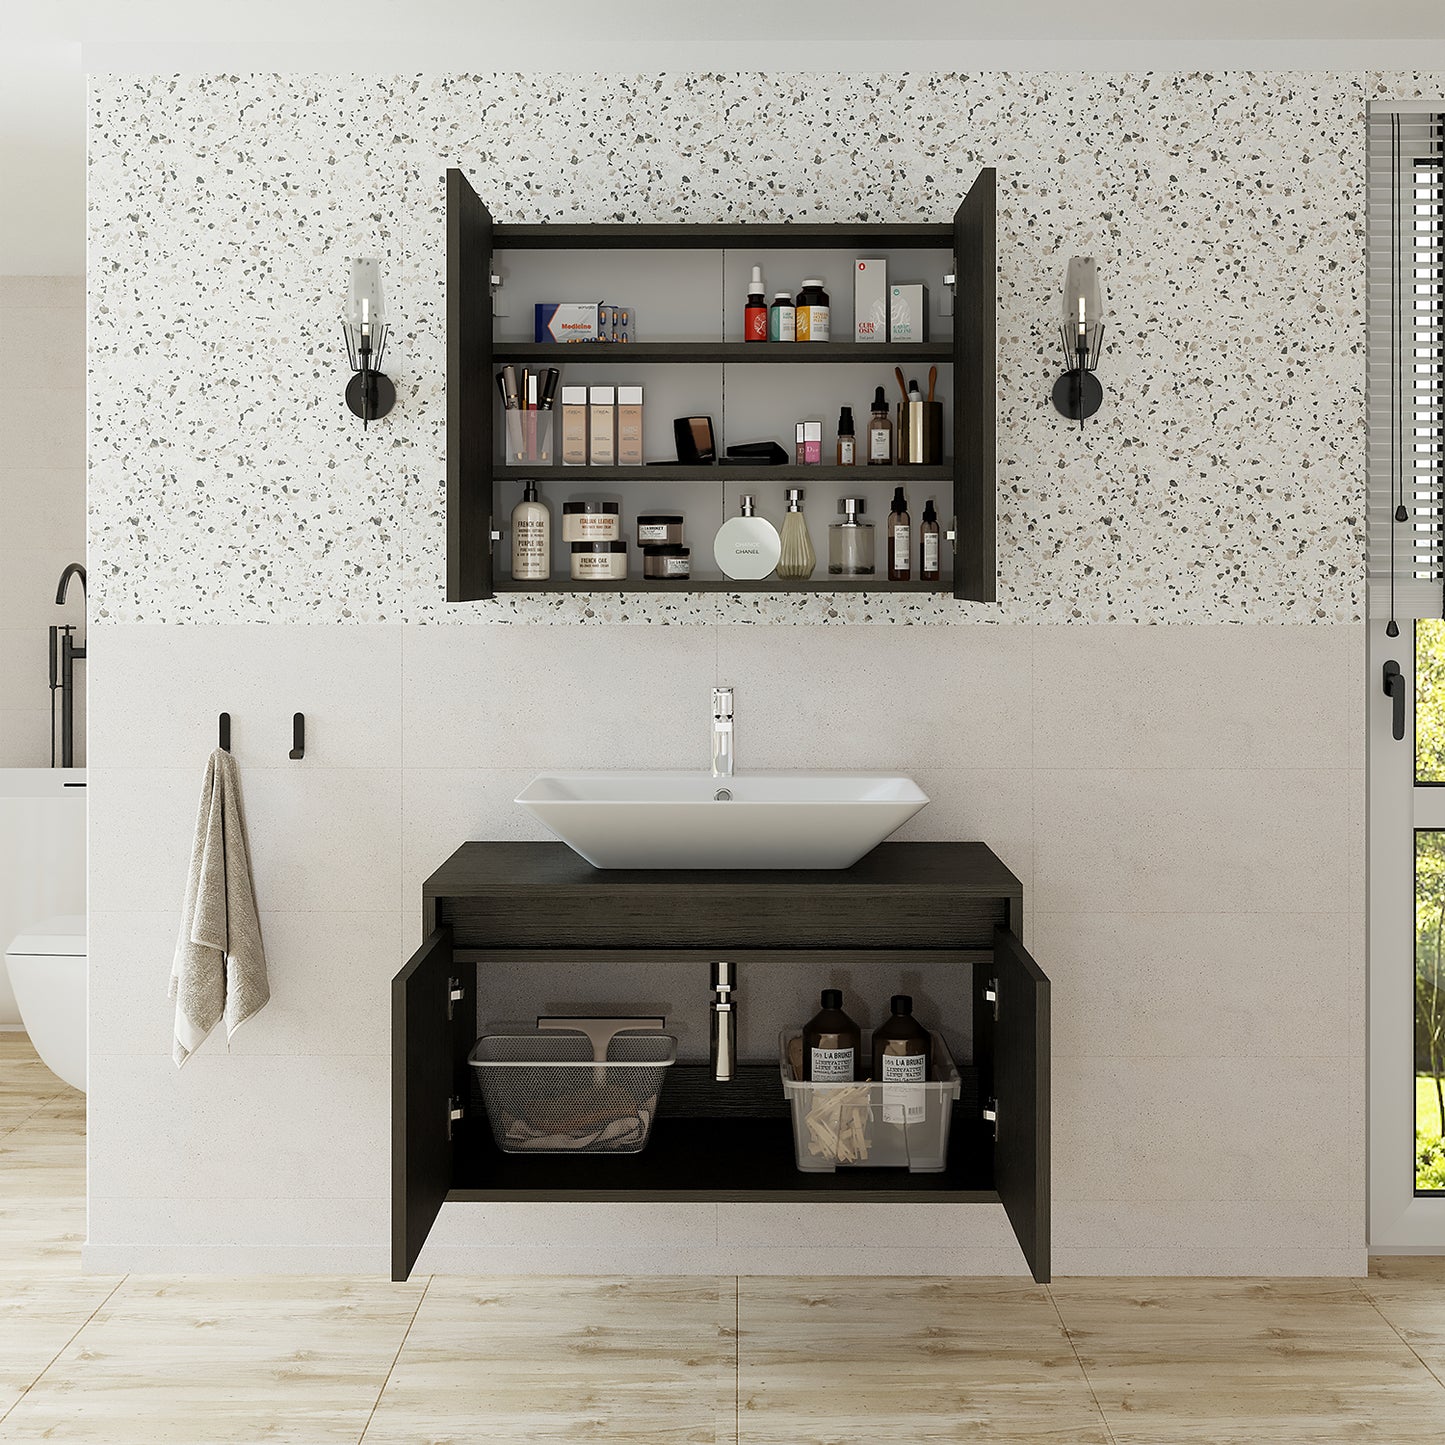 Roomart • Ensemble de meubles de salle de bain • ATLANTIC • 3 pièces • Meuble sous vasque 85 cm avec vasque en céramique • Meuble miroir